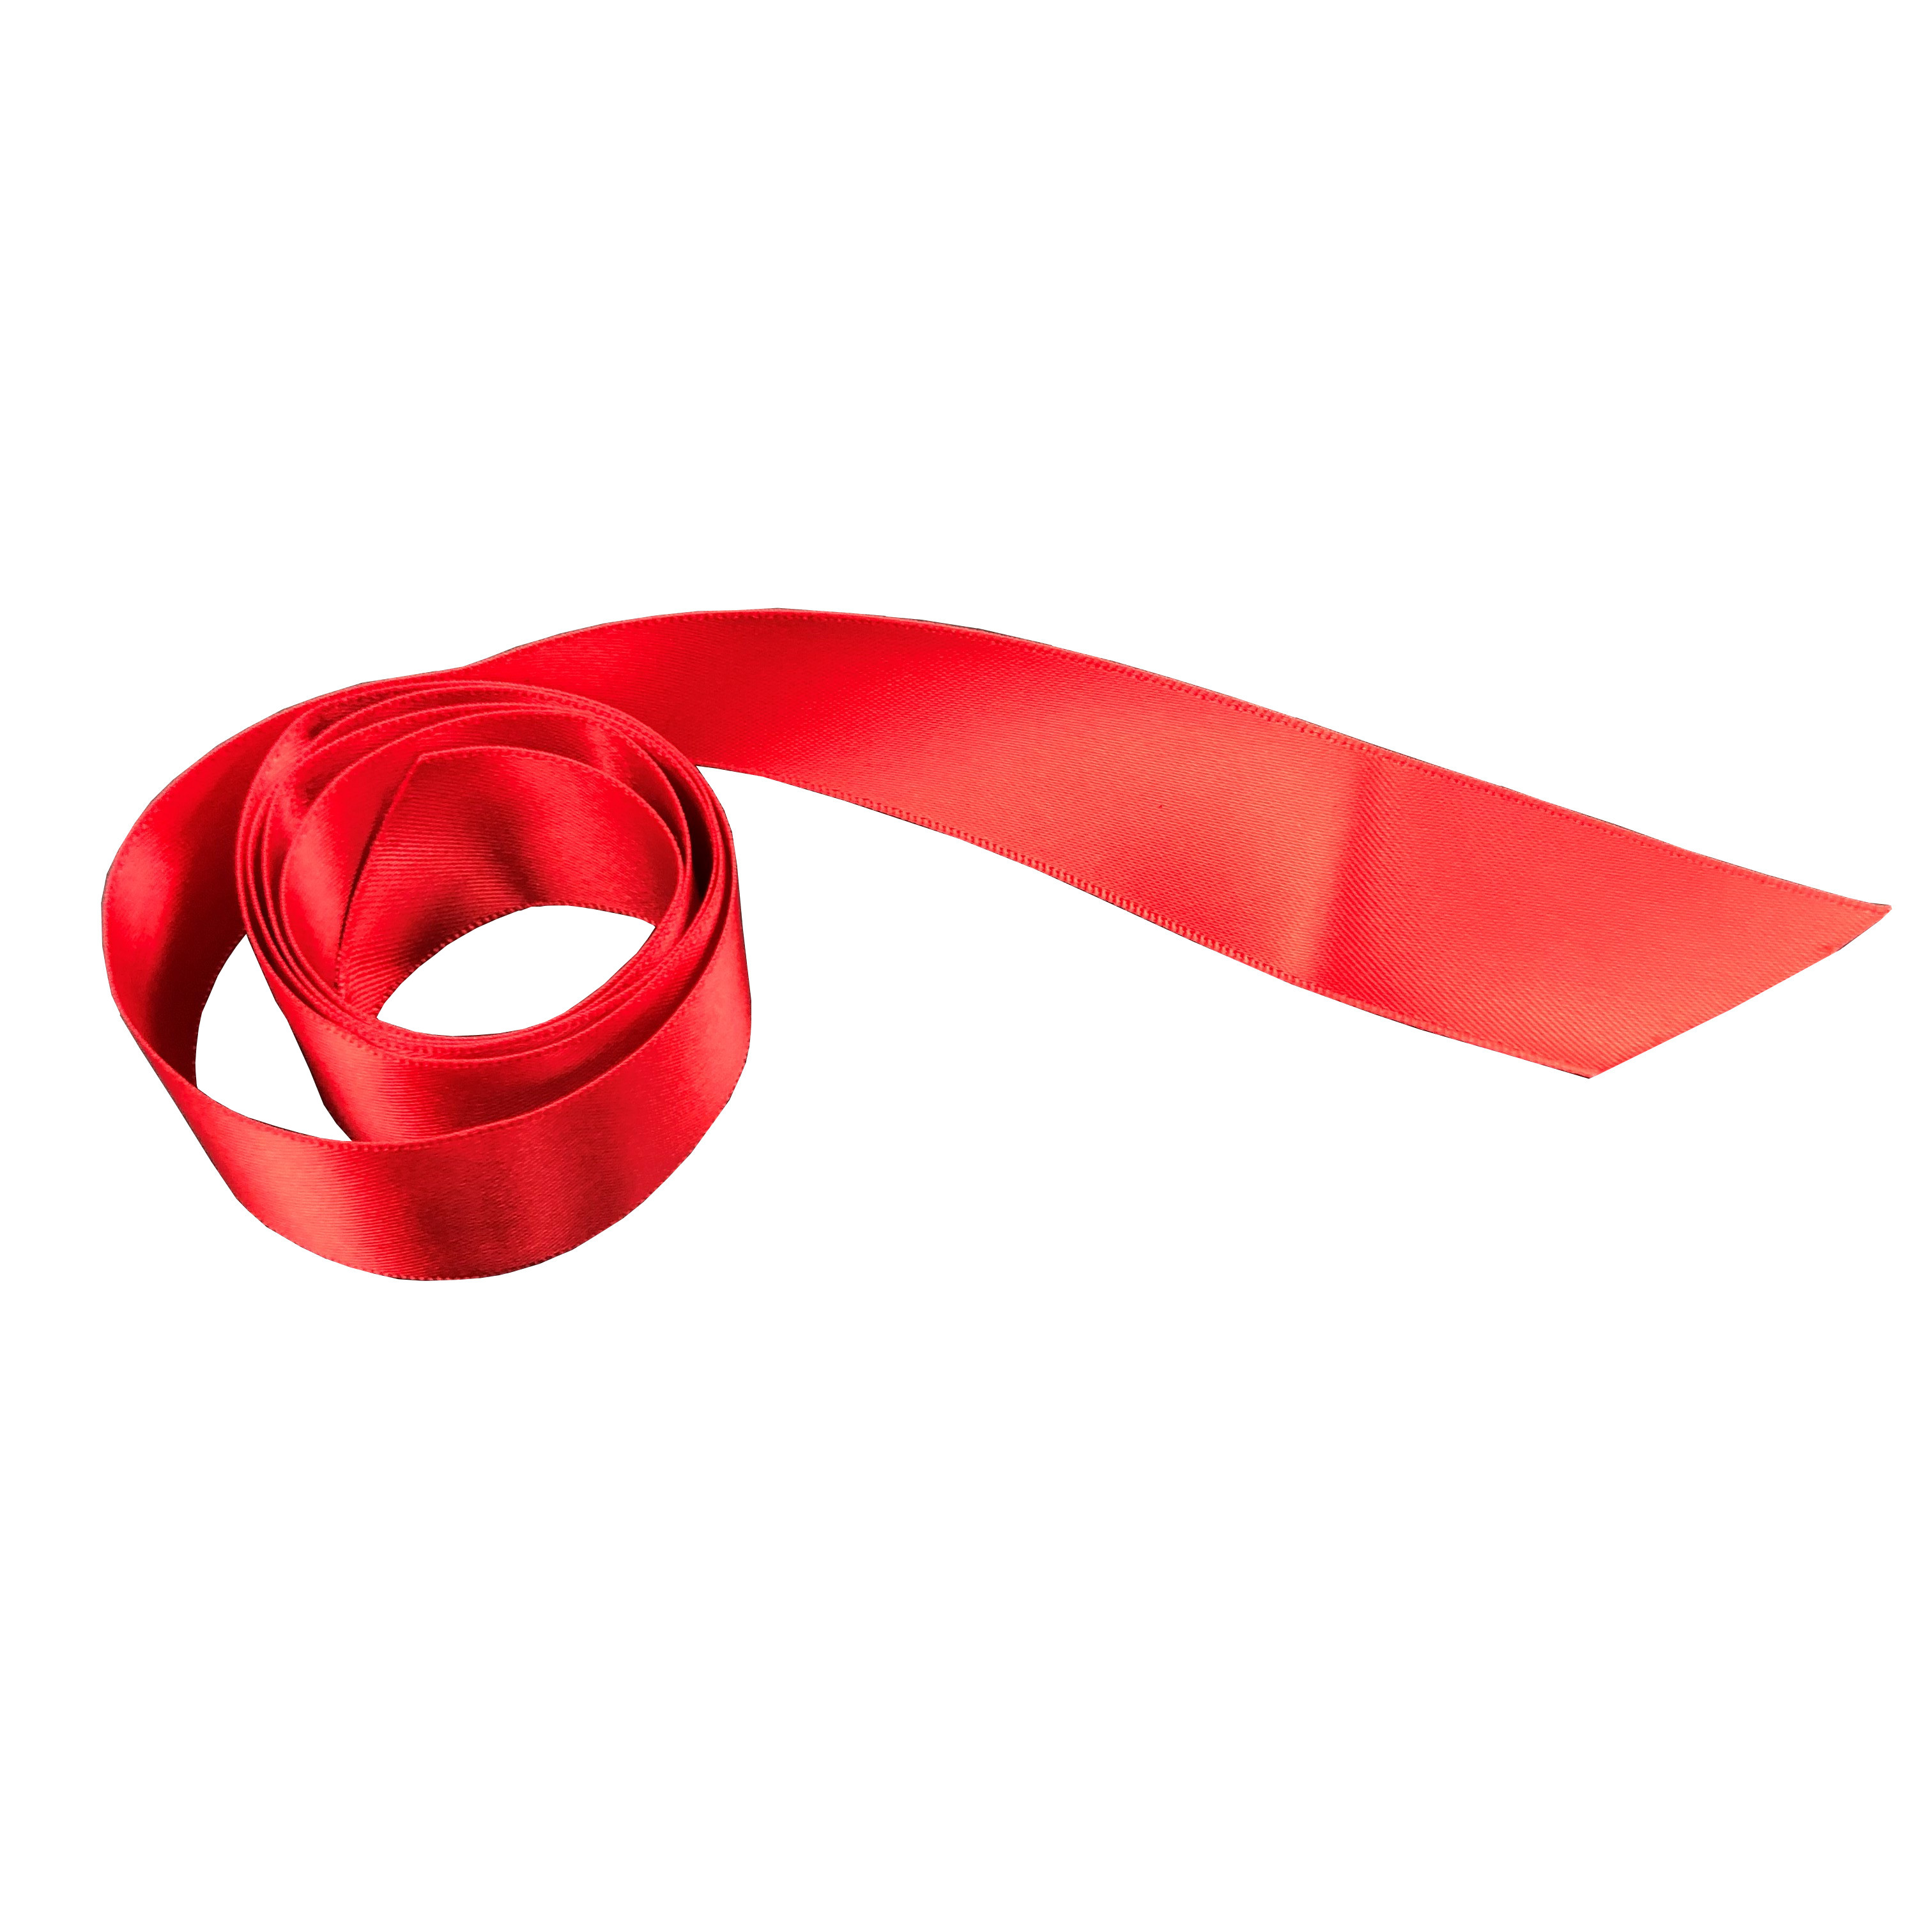 red hair ribbon